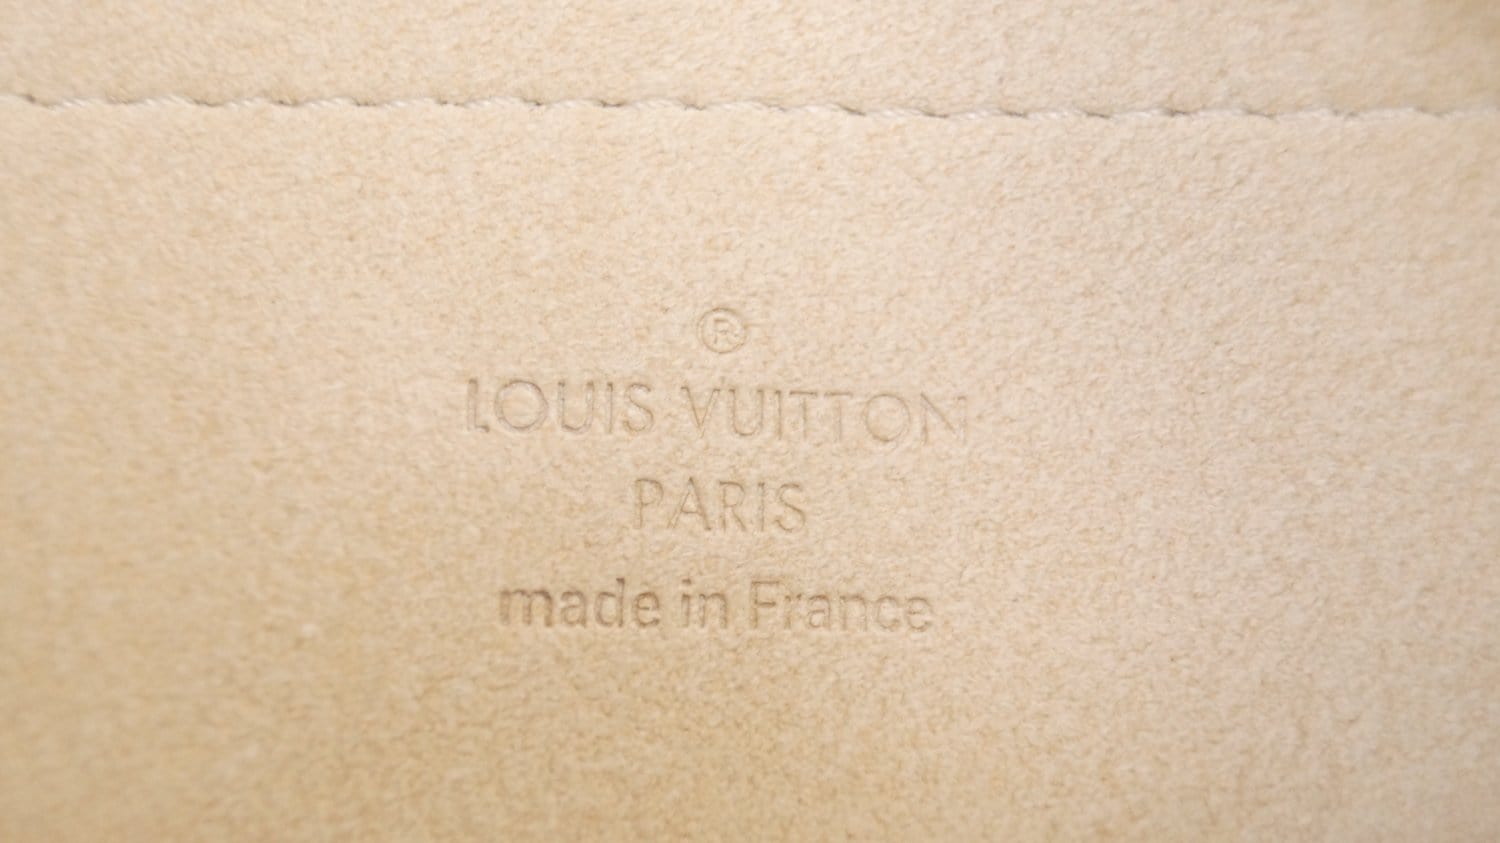 Louis Vuitton Medium Pochette Damier Graphite – Mills Jewelers & Loan